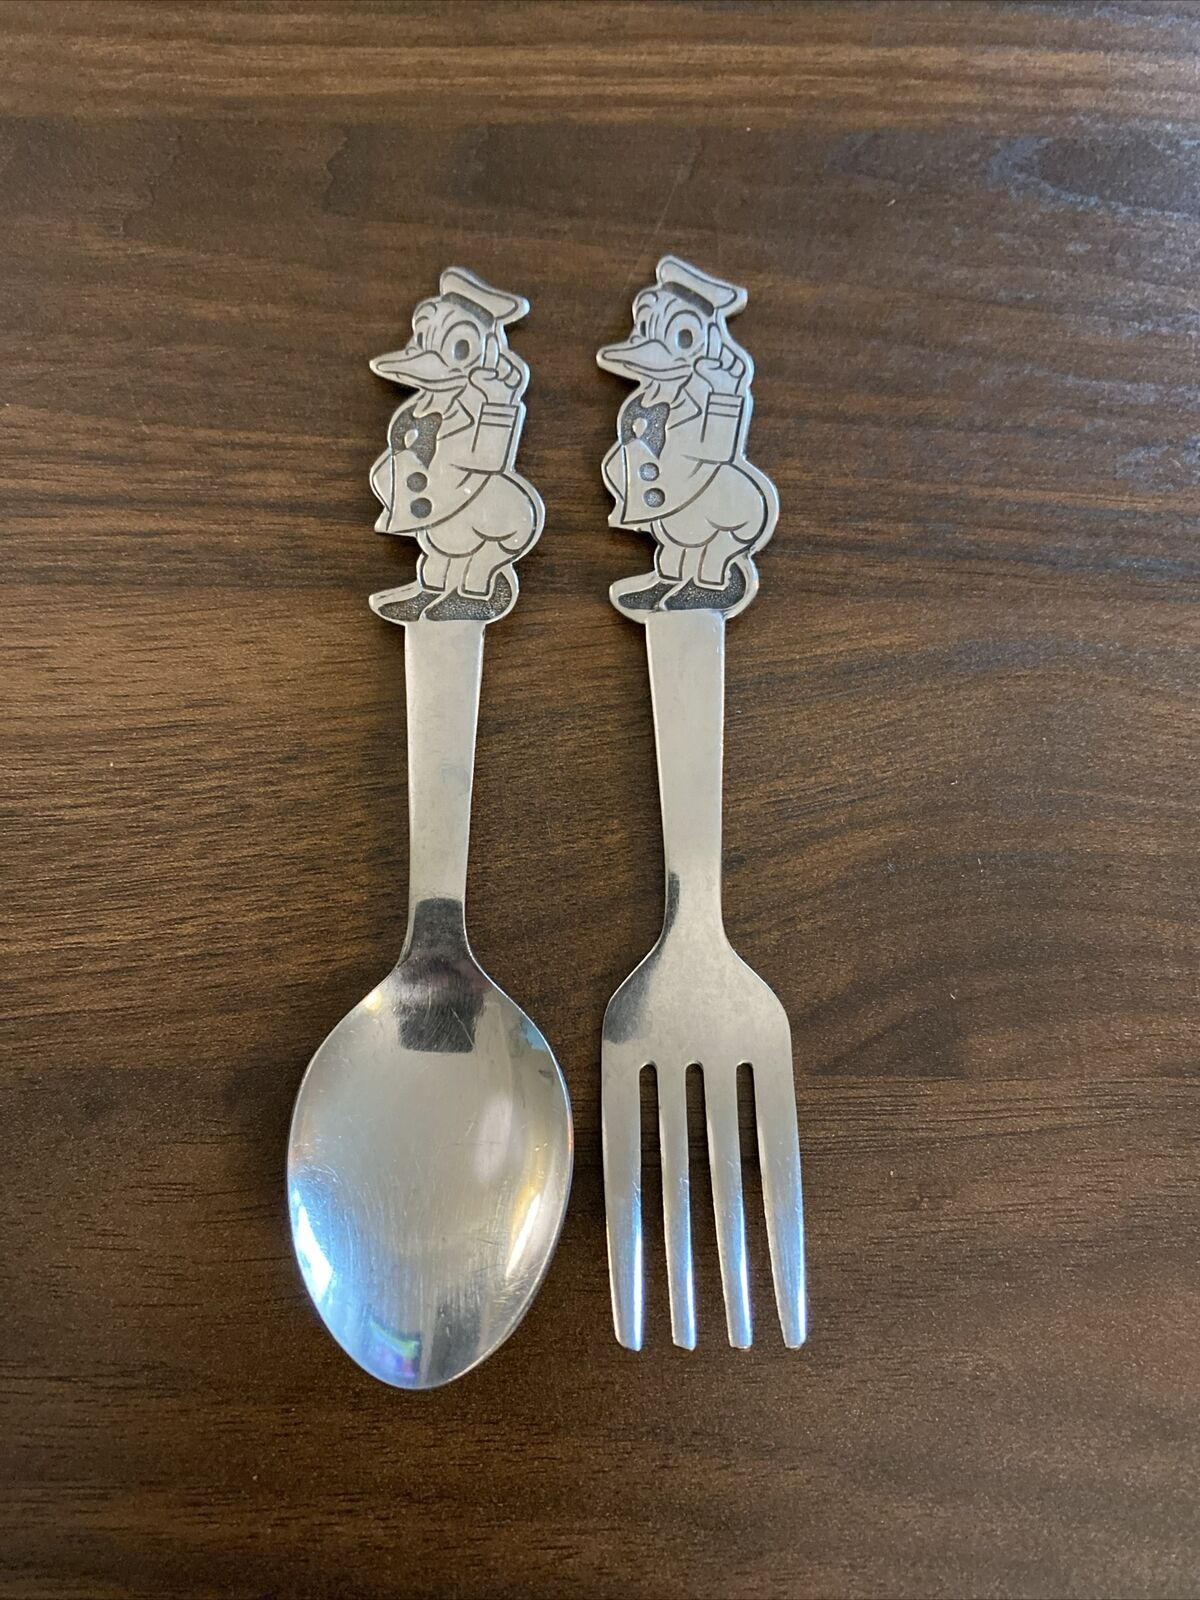 Vintage Walt Disney Donald Duck spoon and fork set